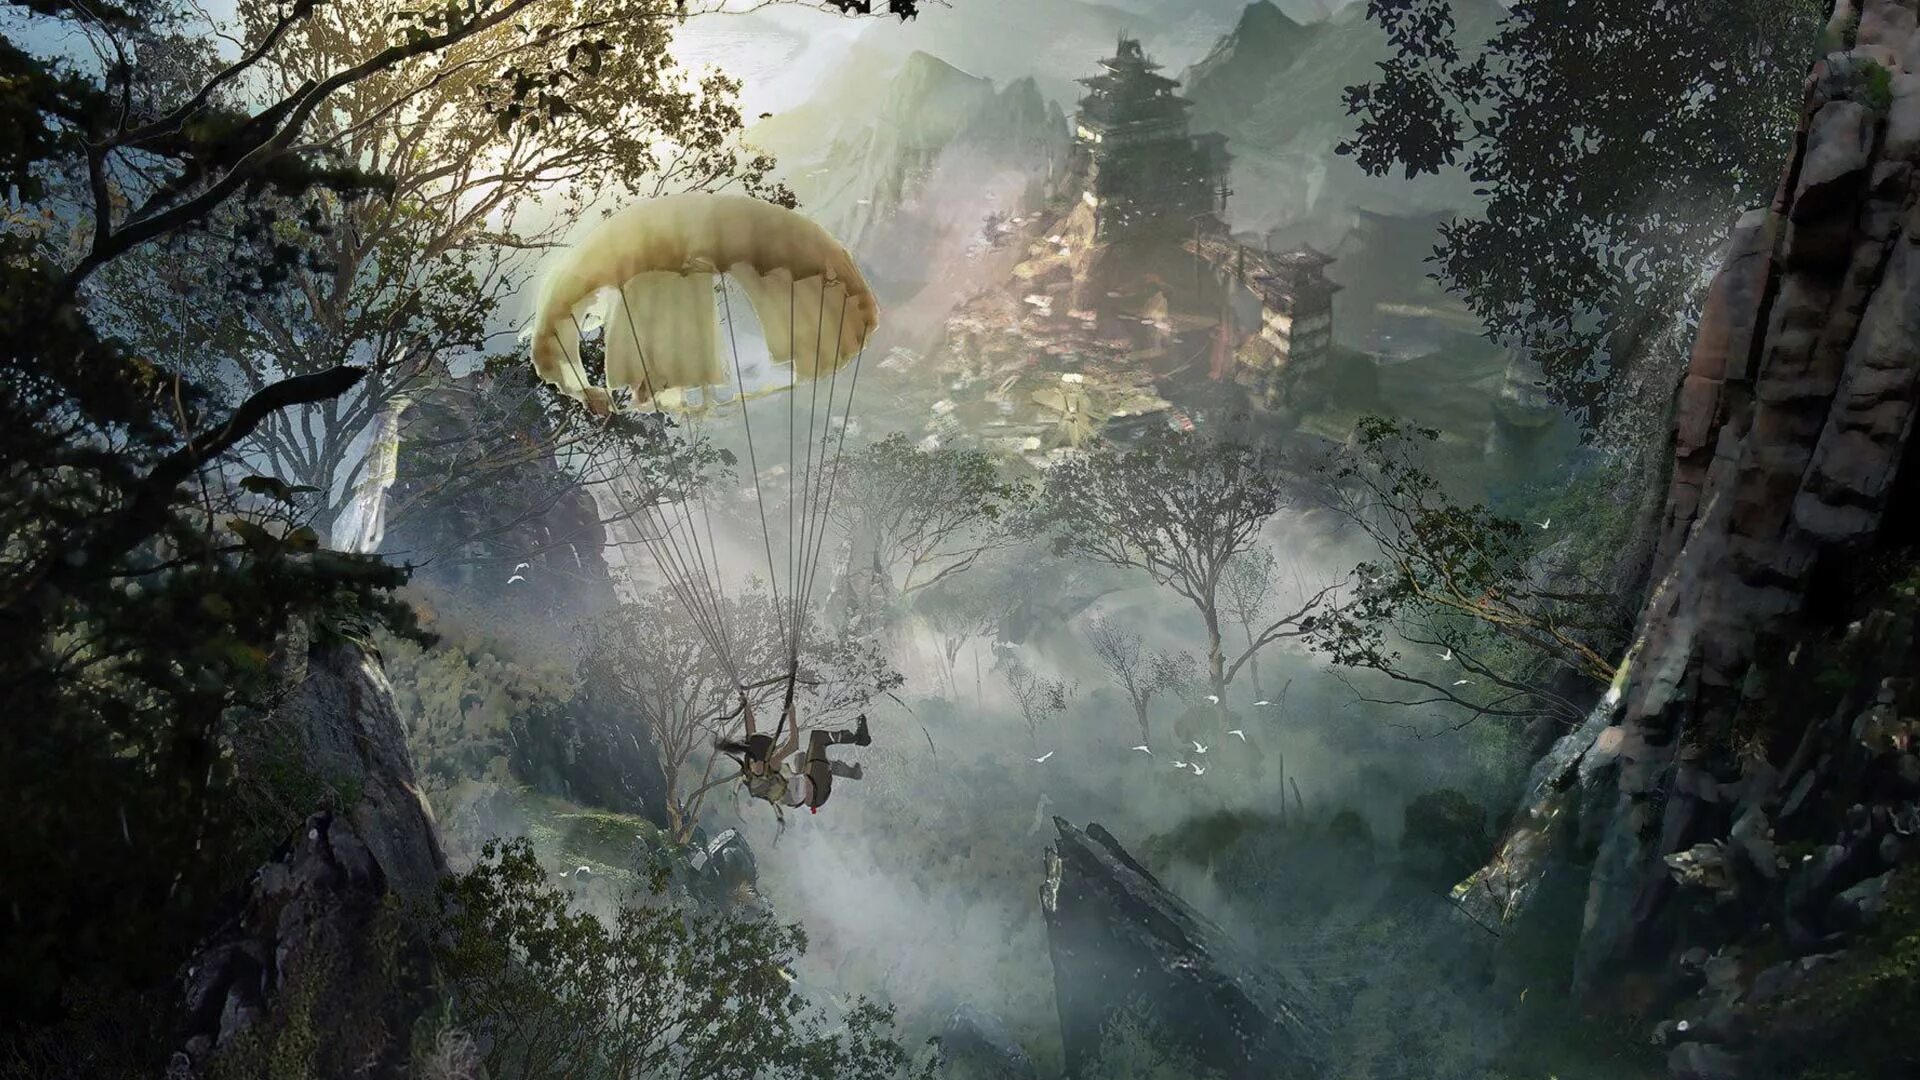 Lara croft island. Tomb Raider Яматай. Tomb Raider 2013 Concept Art. Пейзажи томб Райдер Яматай.